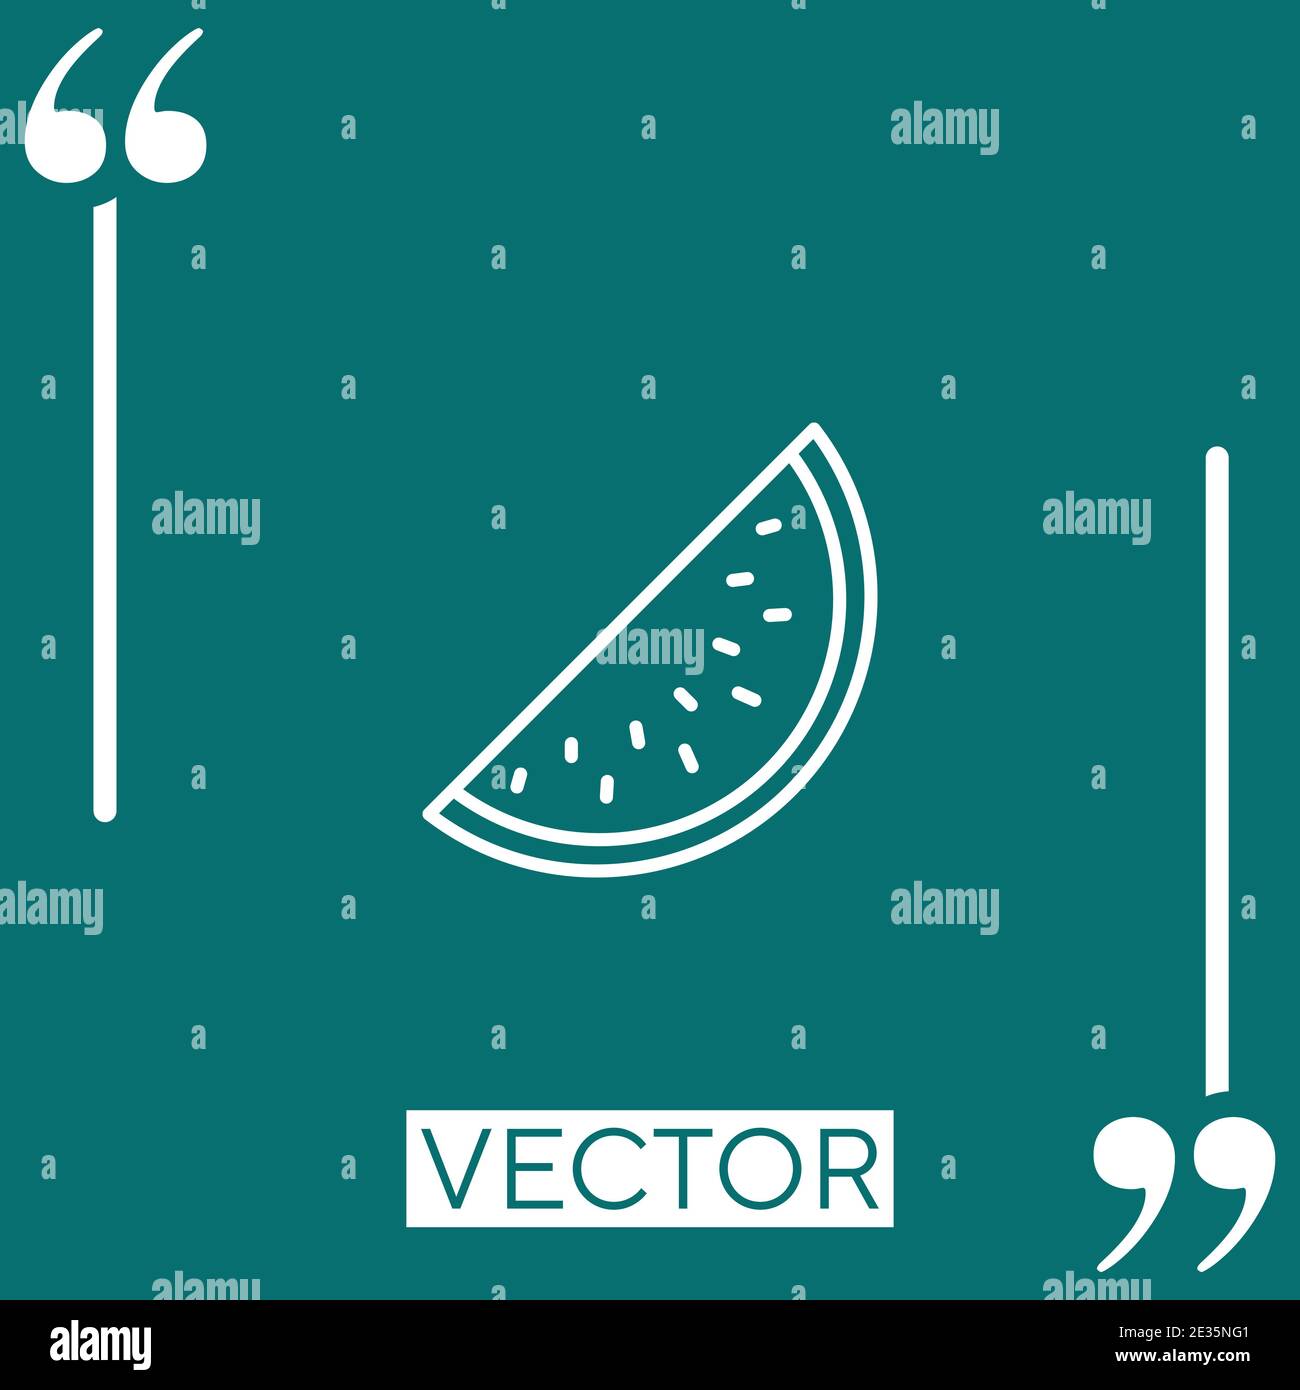 watermelon vector icon Linear icon. Editable stroke line Stock Vector